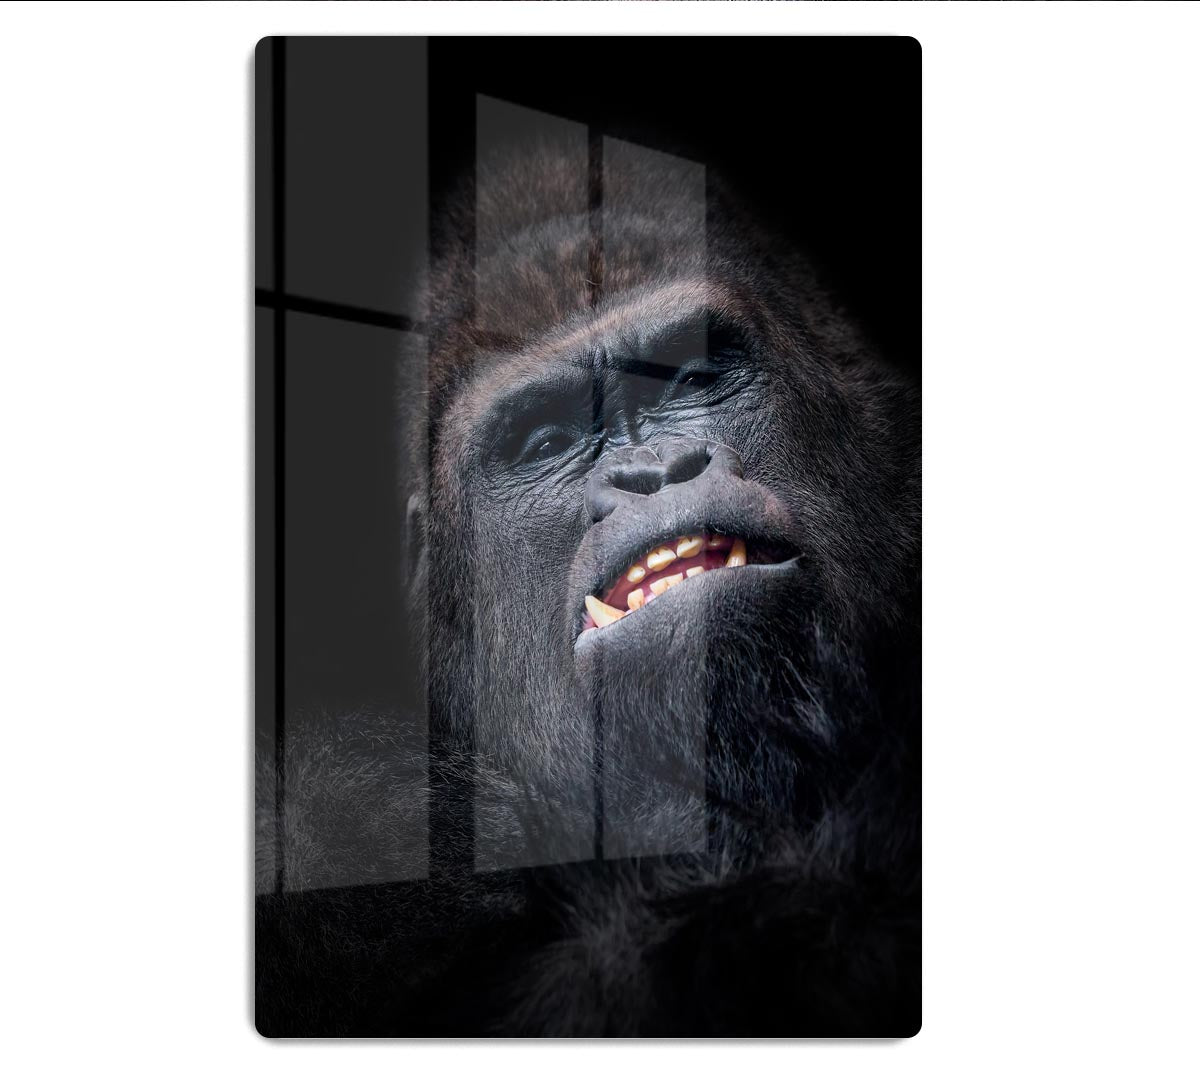 Gorilla face seen from above HD Metal Print - Canvas Art Rocks - 1